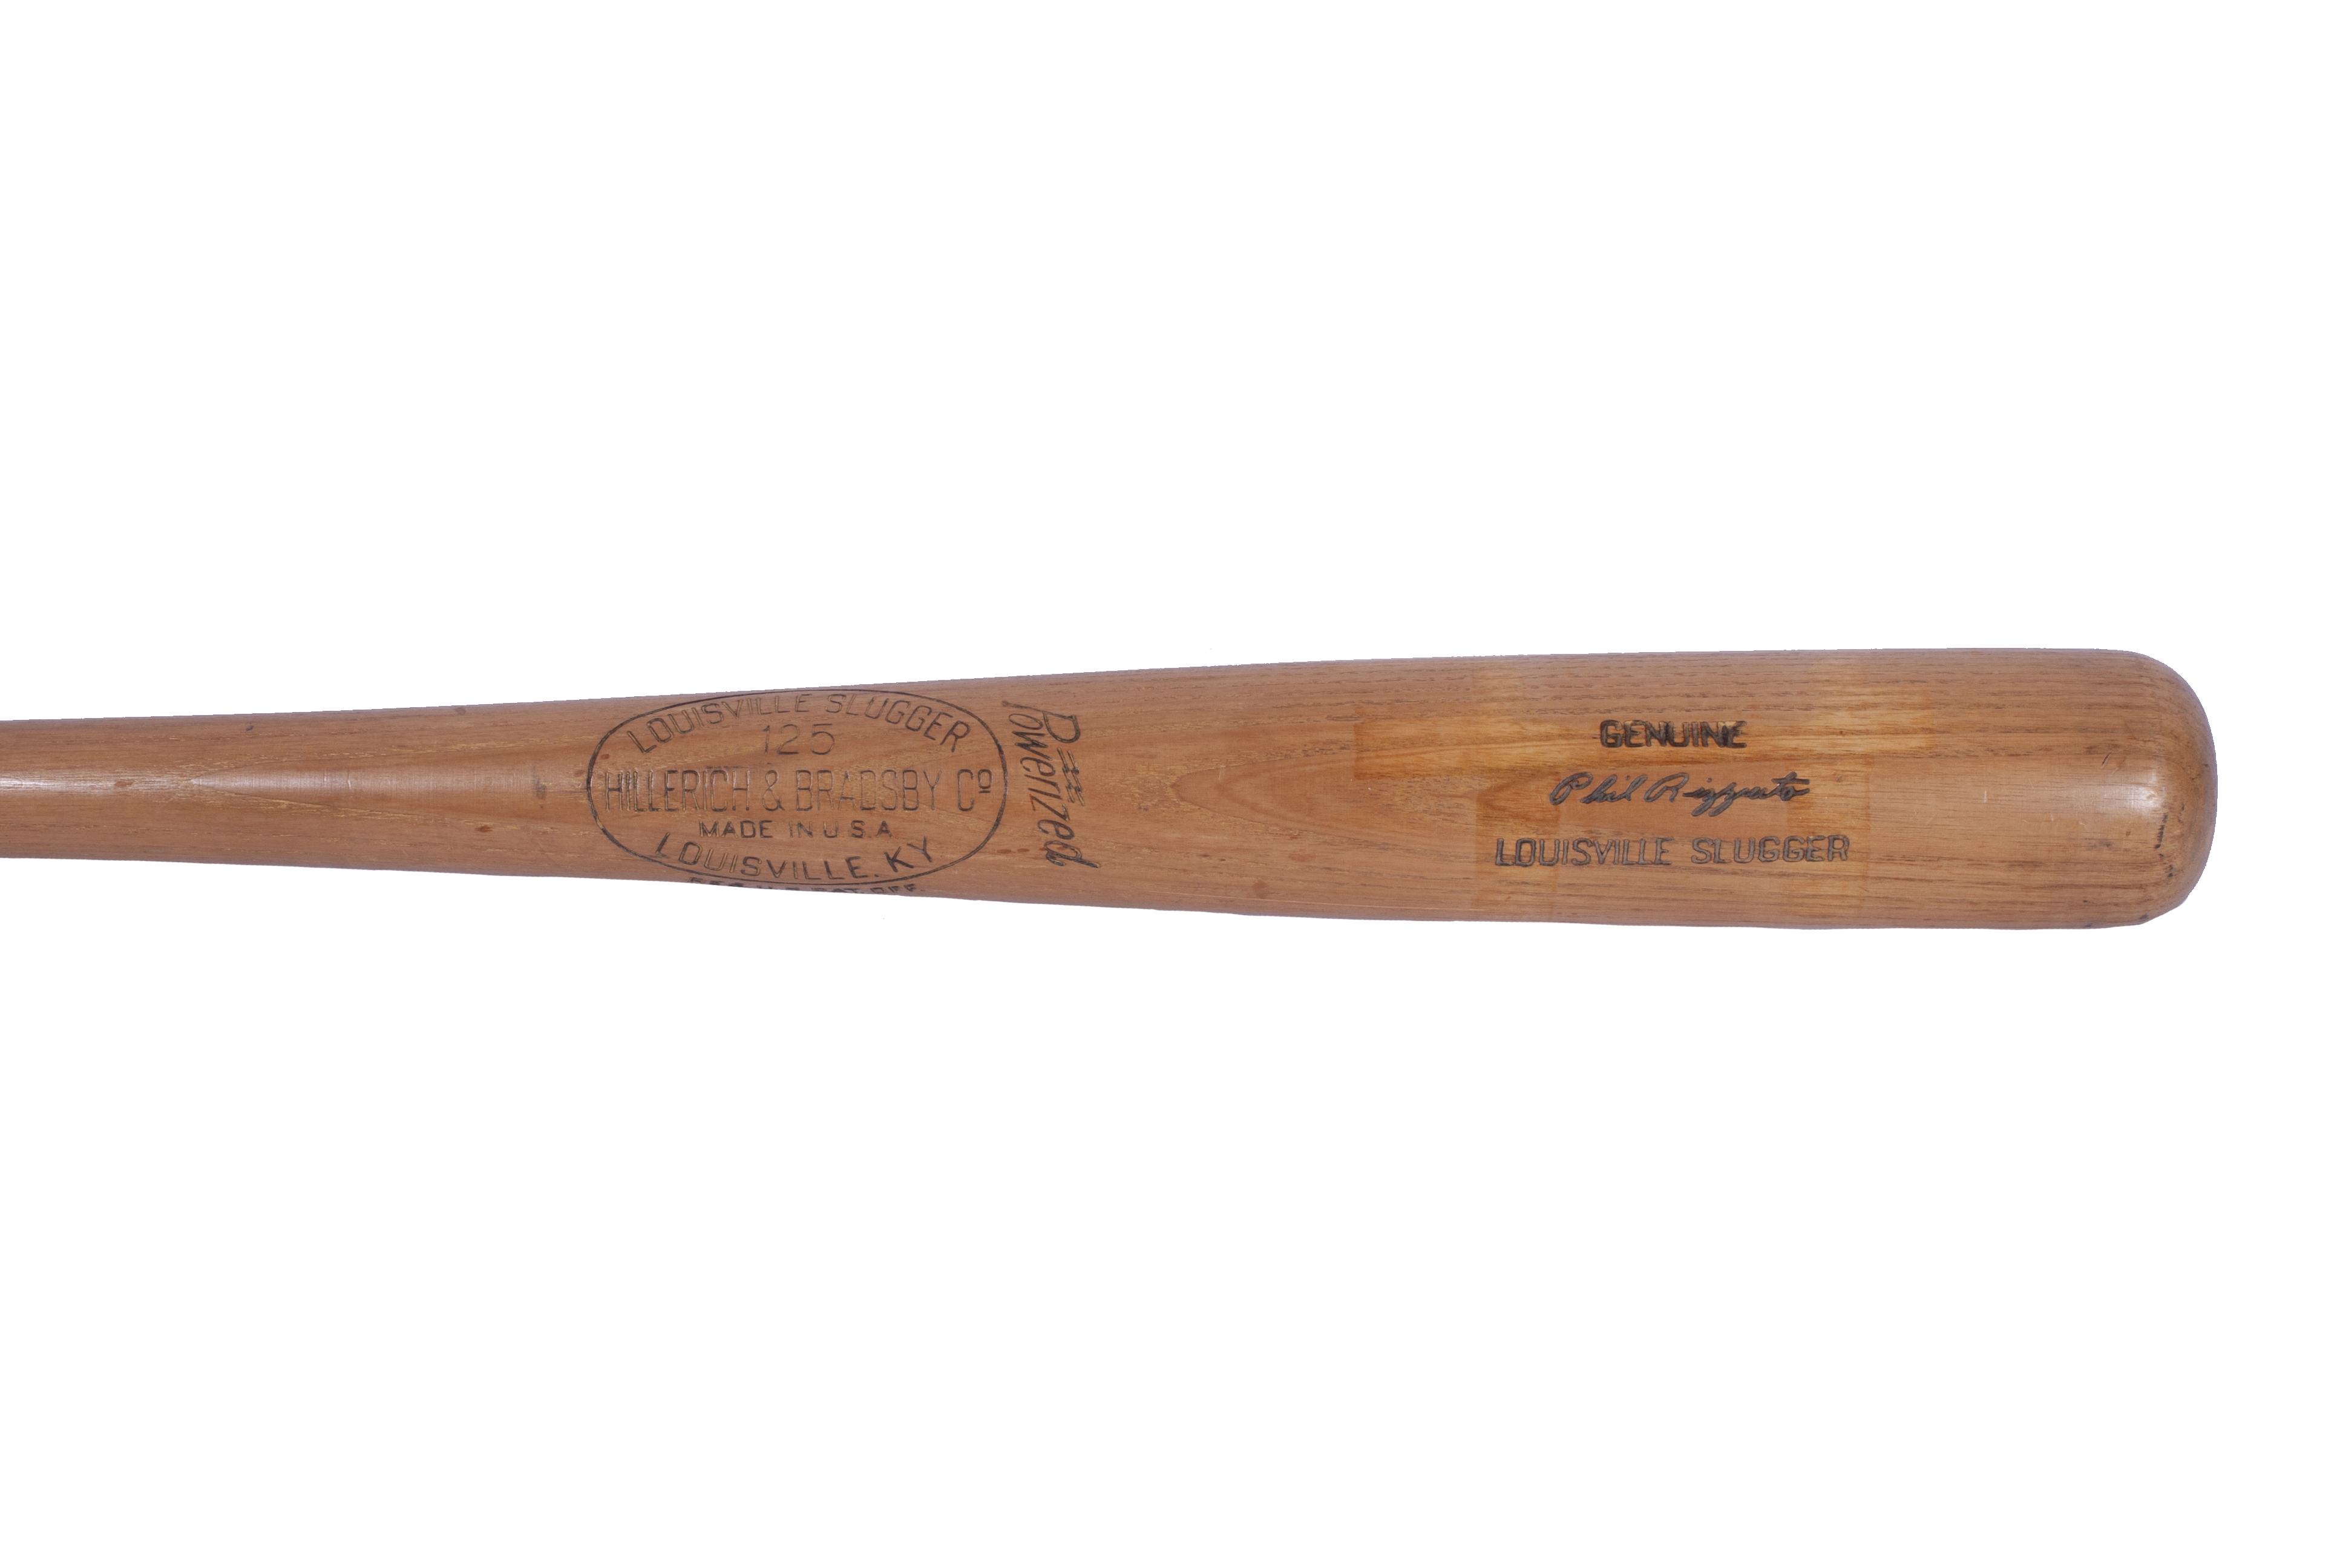 Phil Rizzuto Autographed Louisville Slugger Bat New York Yankees Scooter &  MVP 1950  Beckett BAS QR #